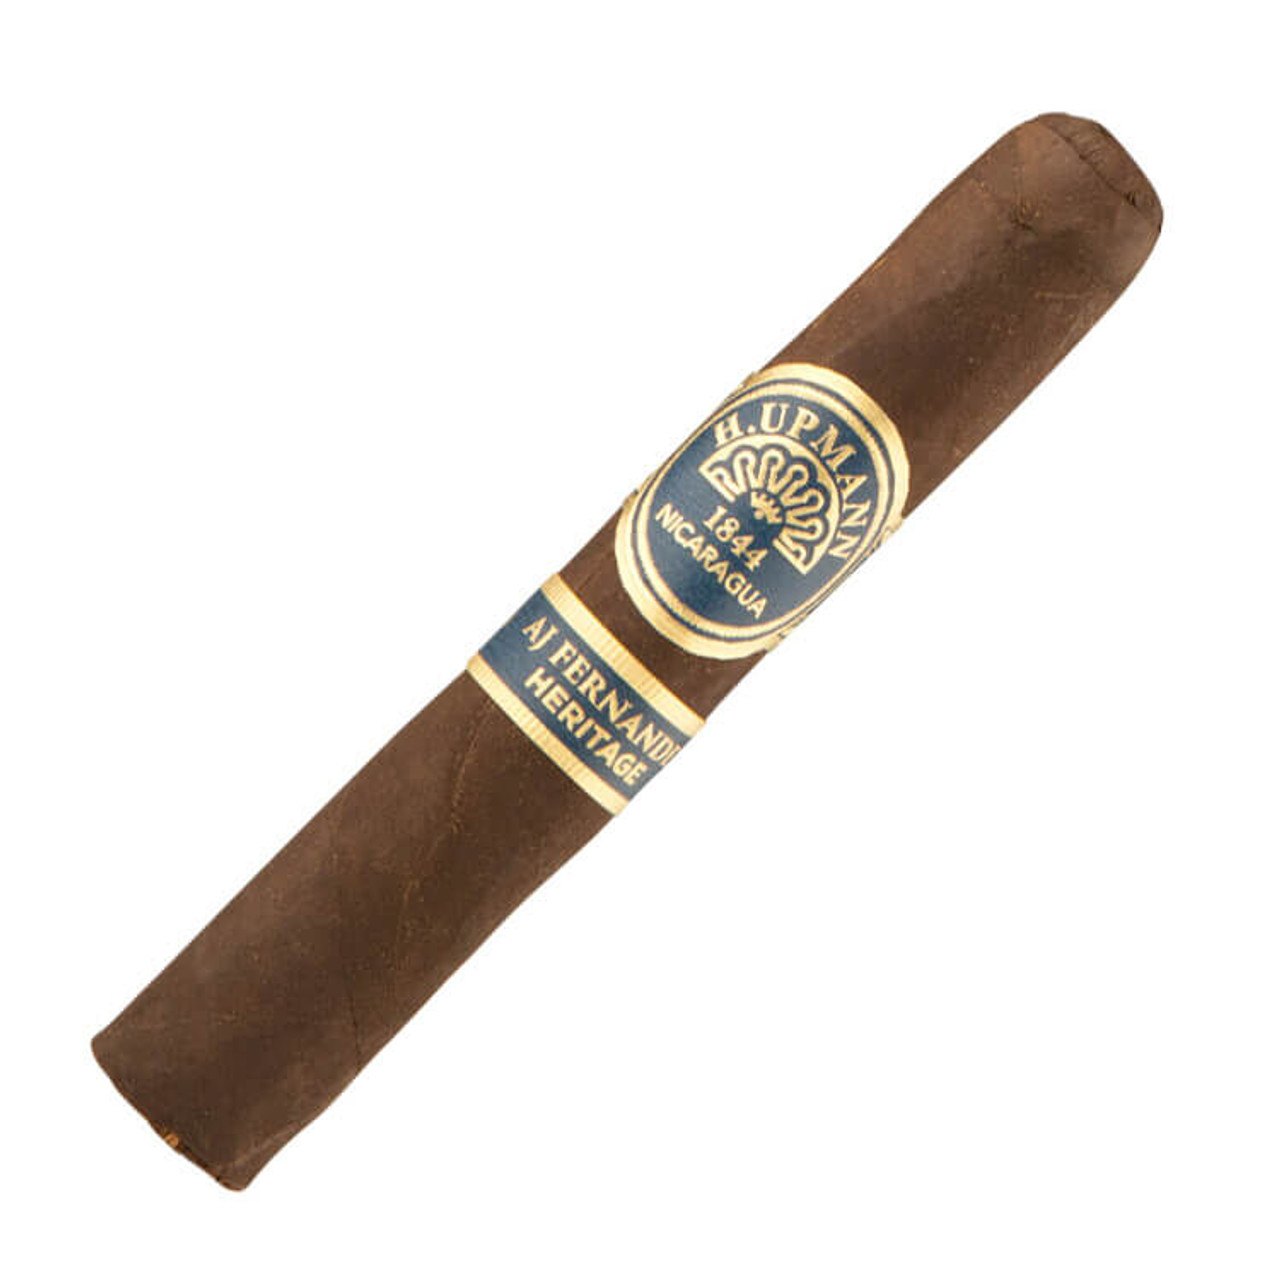 Nicaragua Heritage by AJ Fernandez Robusto Cigars - 5 x 52 Single